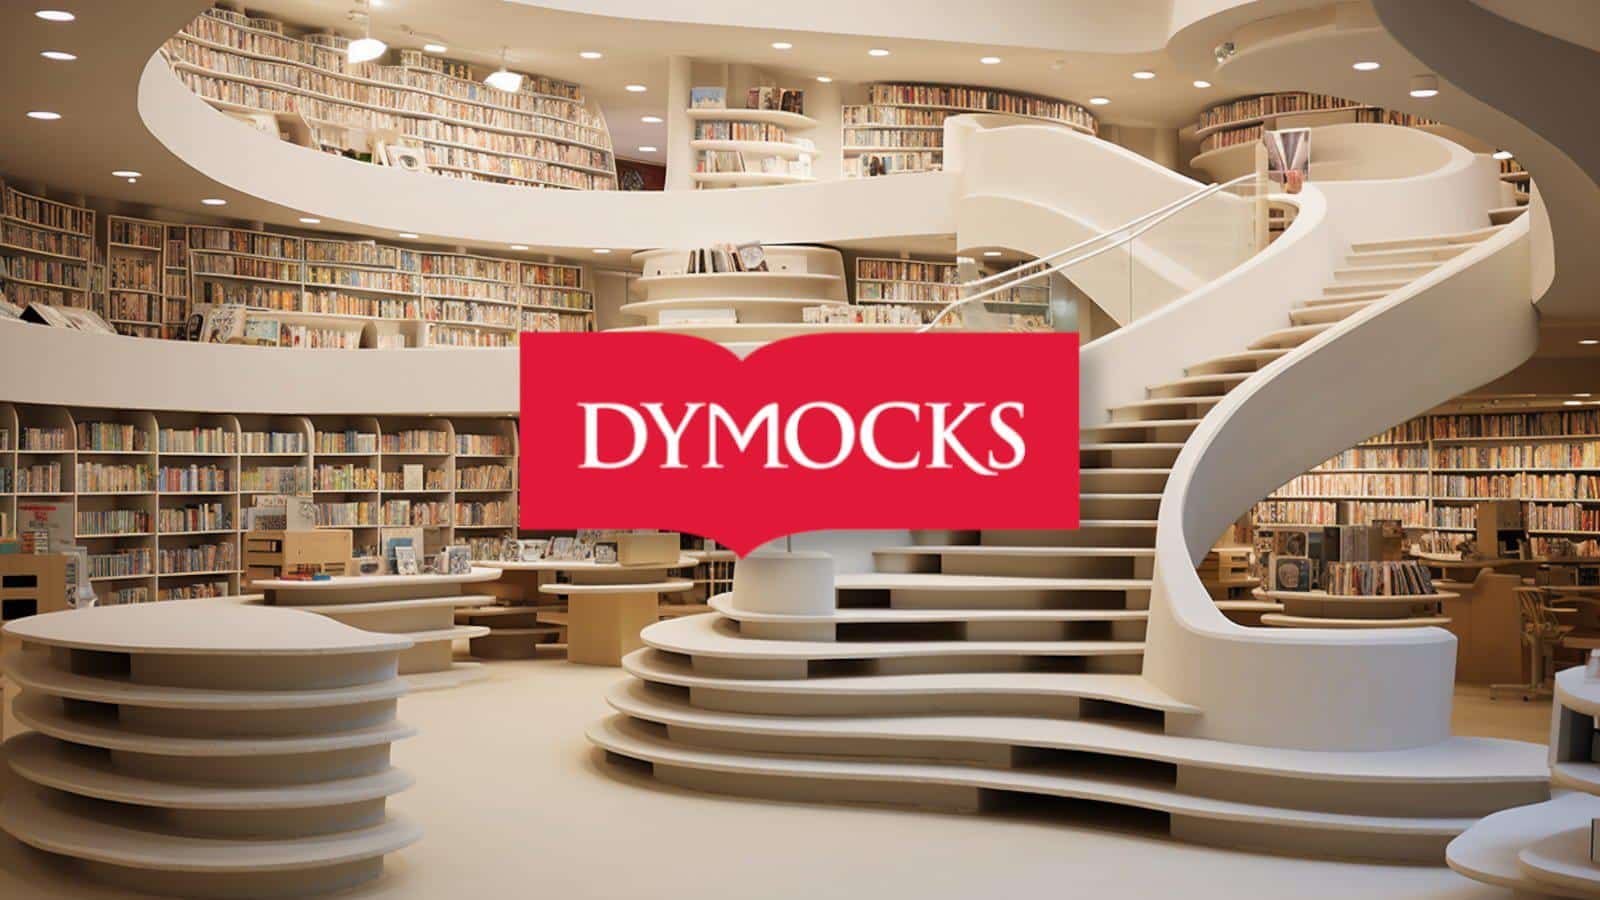 Dymocks Booksellers suffers data breach impacting 836k customers